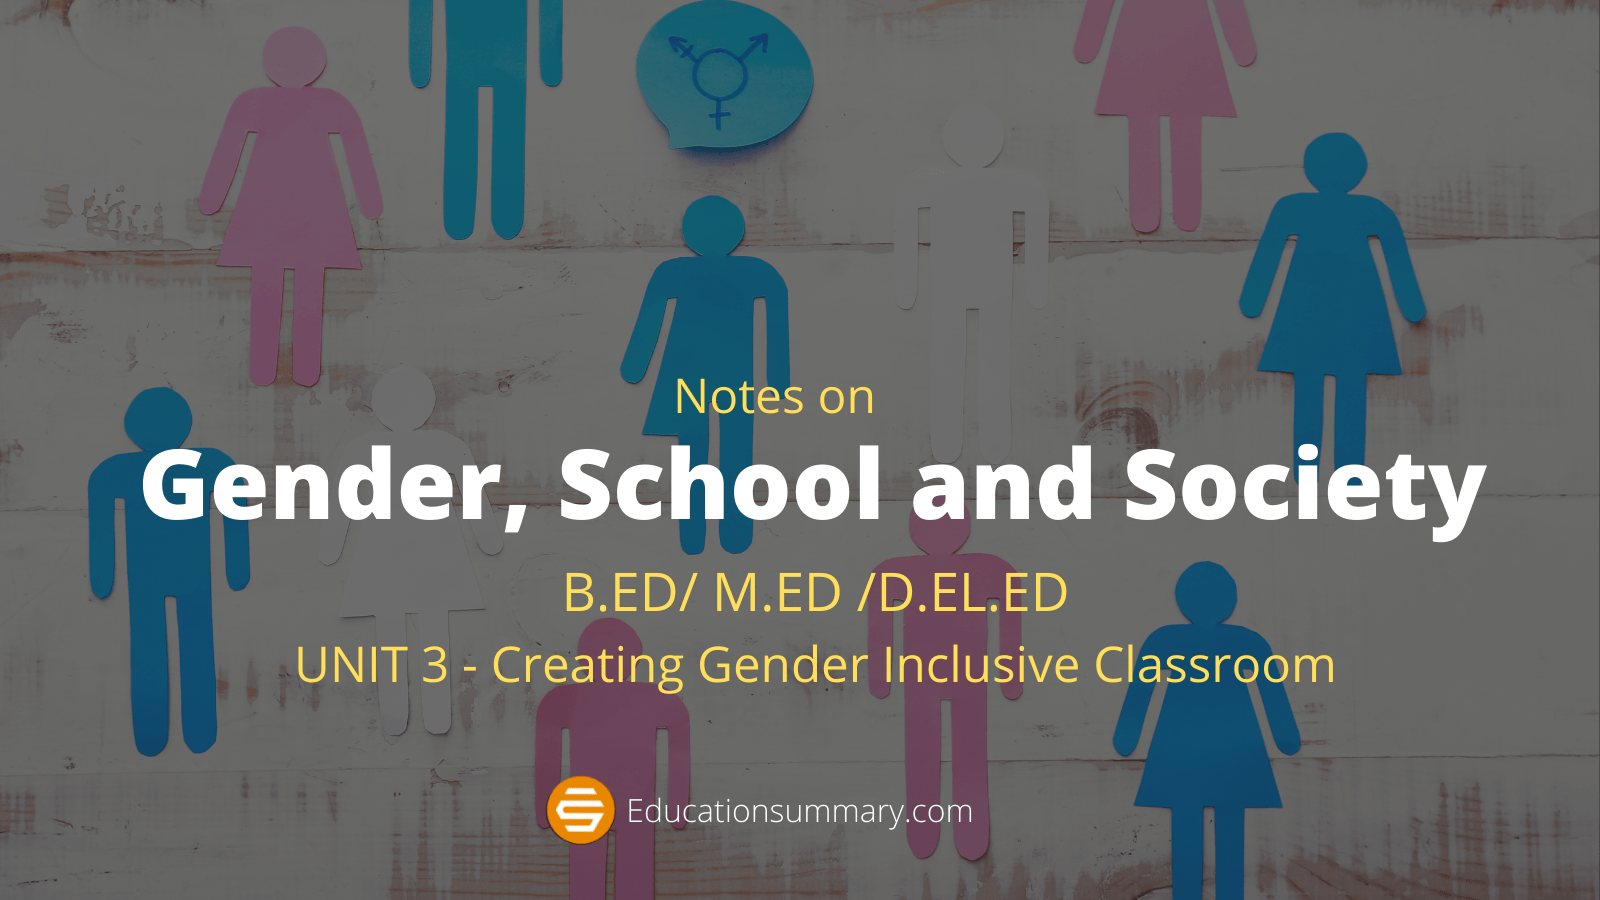 _Gender, School and Society Education Summary B.ED M.ED D.EL.ED Creating Gender Inclusive Classroom